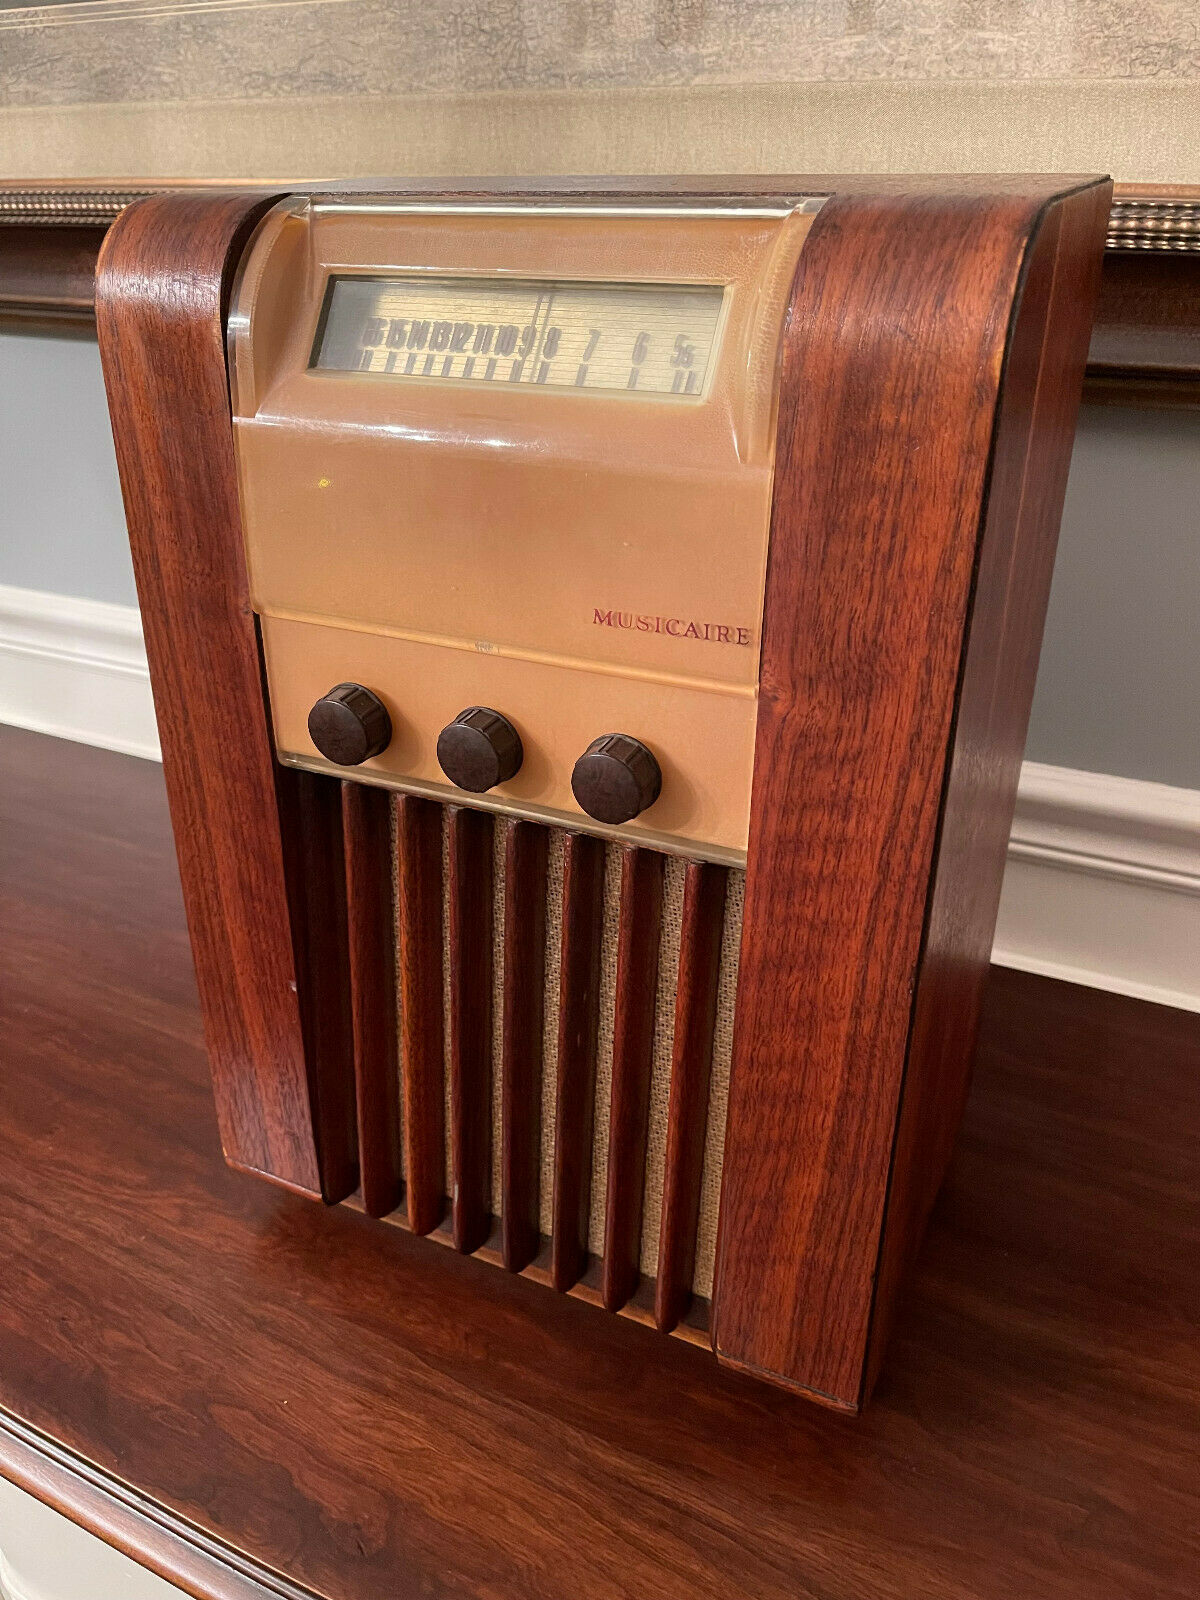 1948 Musicaire Model 576 Working Tombstone Radio